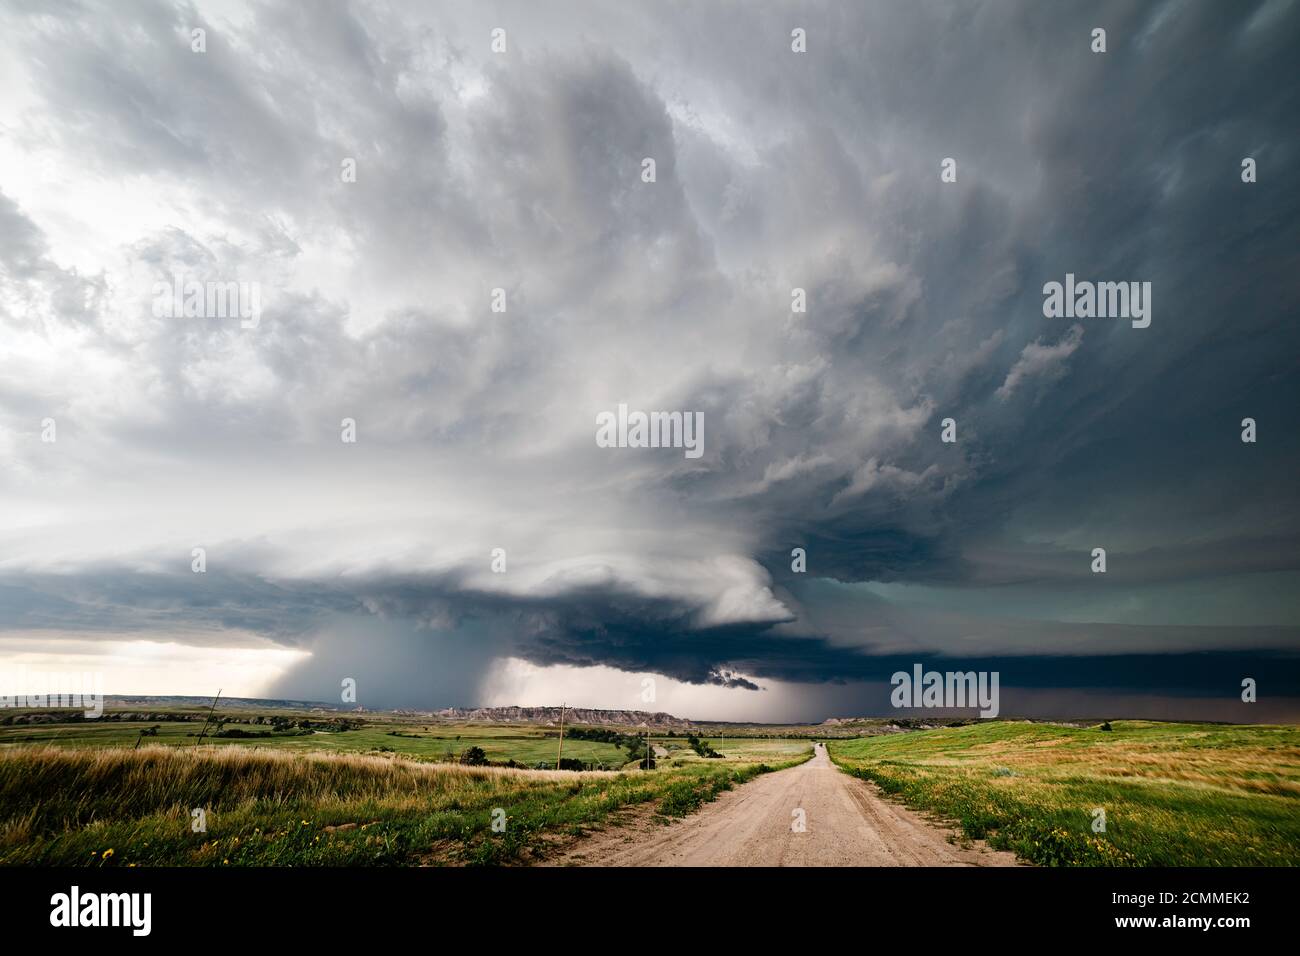 Badlands National Park, South Dakota supercell thunderstorm and scenic landscape Stock Photo